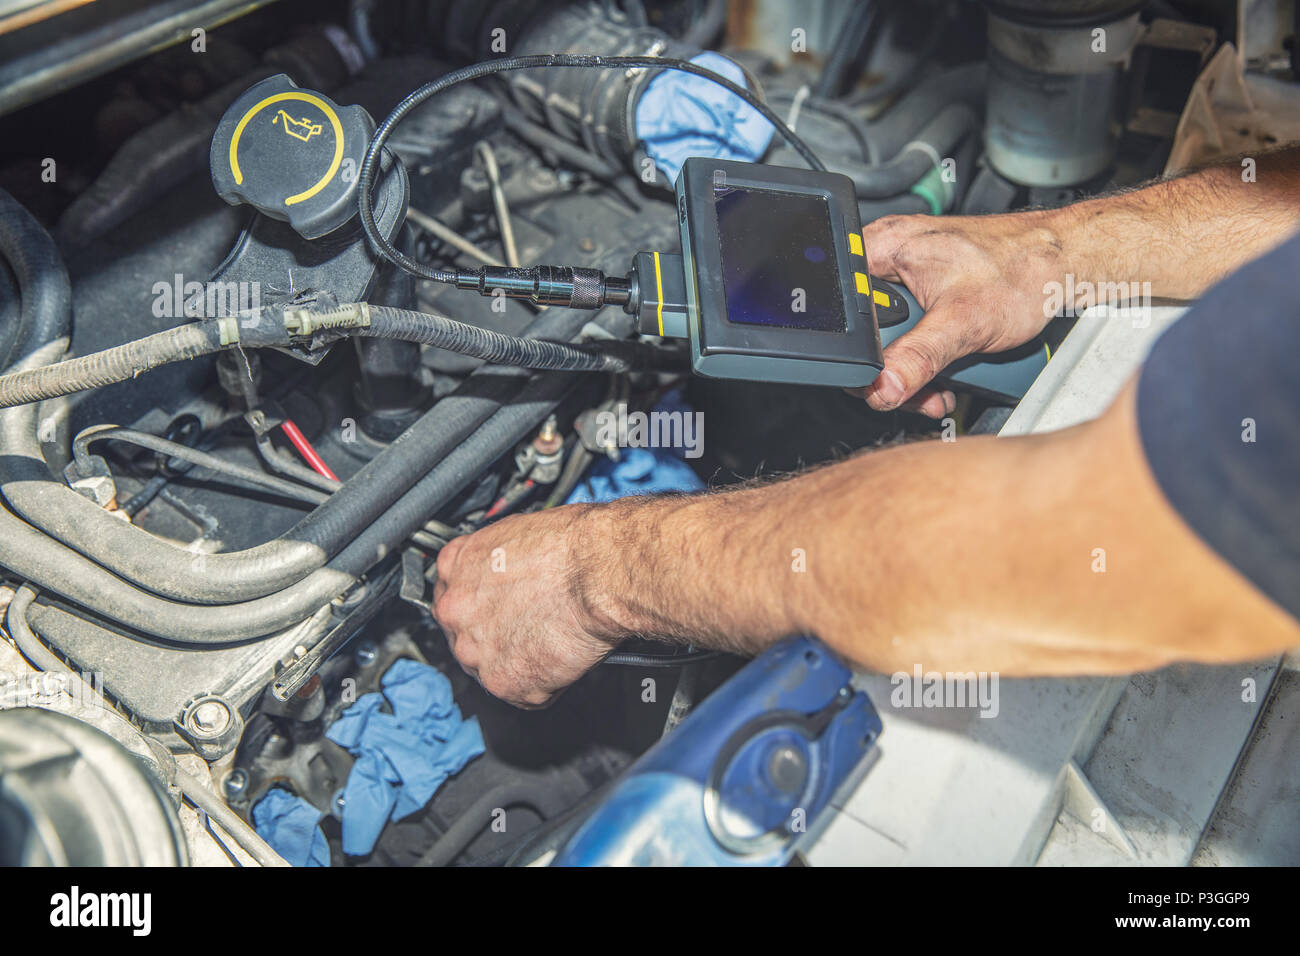 mechanic inspecting car engine with video borescope camera Stock Photo